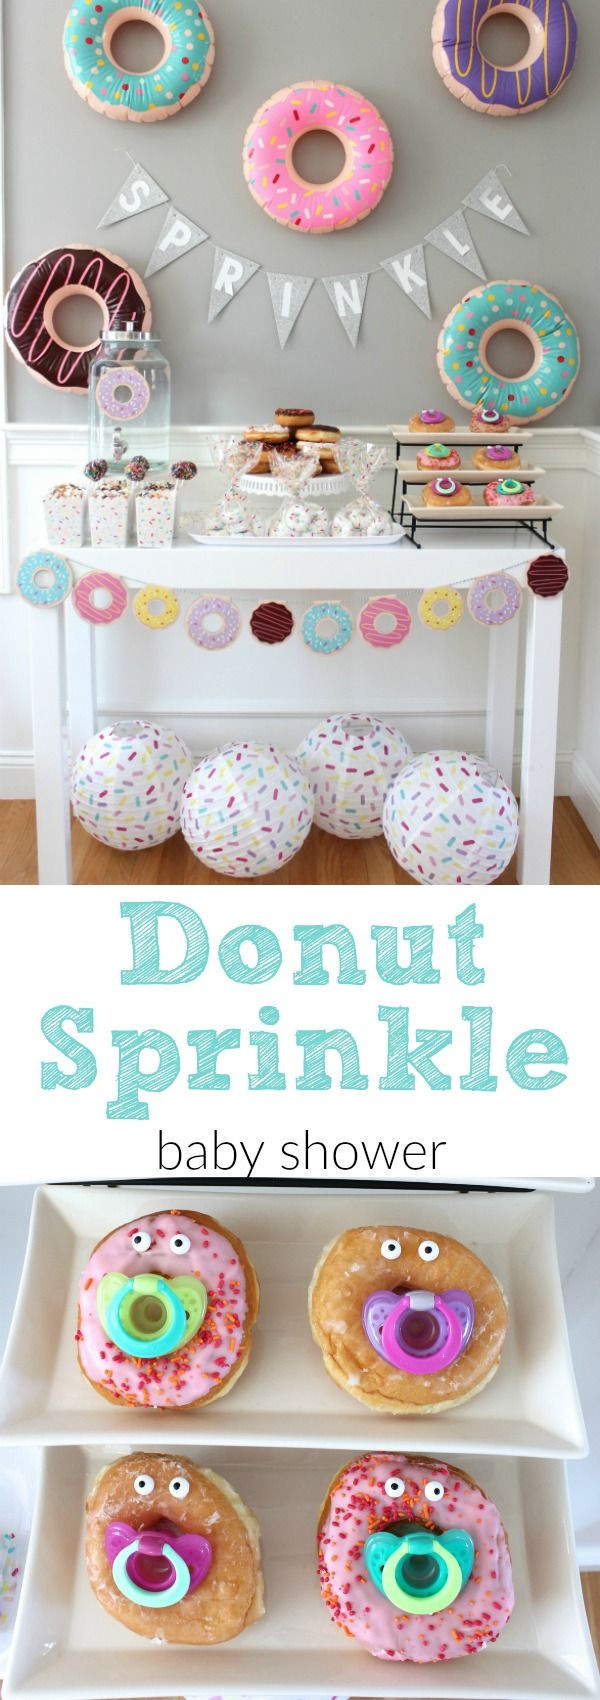 Baby Sprinkle Decoration Ideas
 Donut Sprinkle Baby Shower Ideas